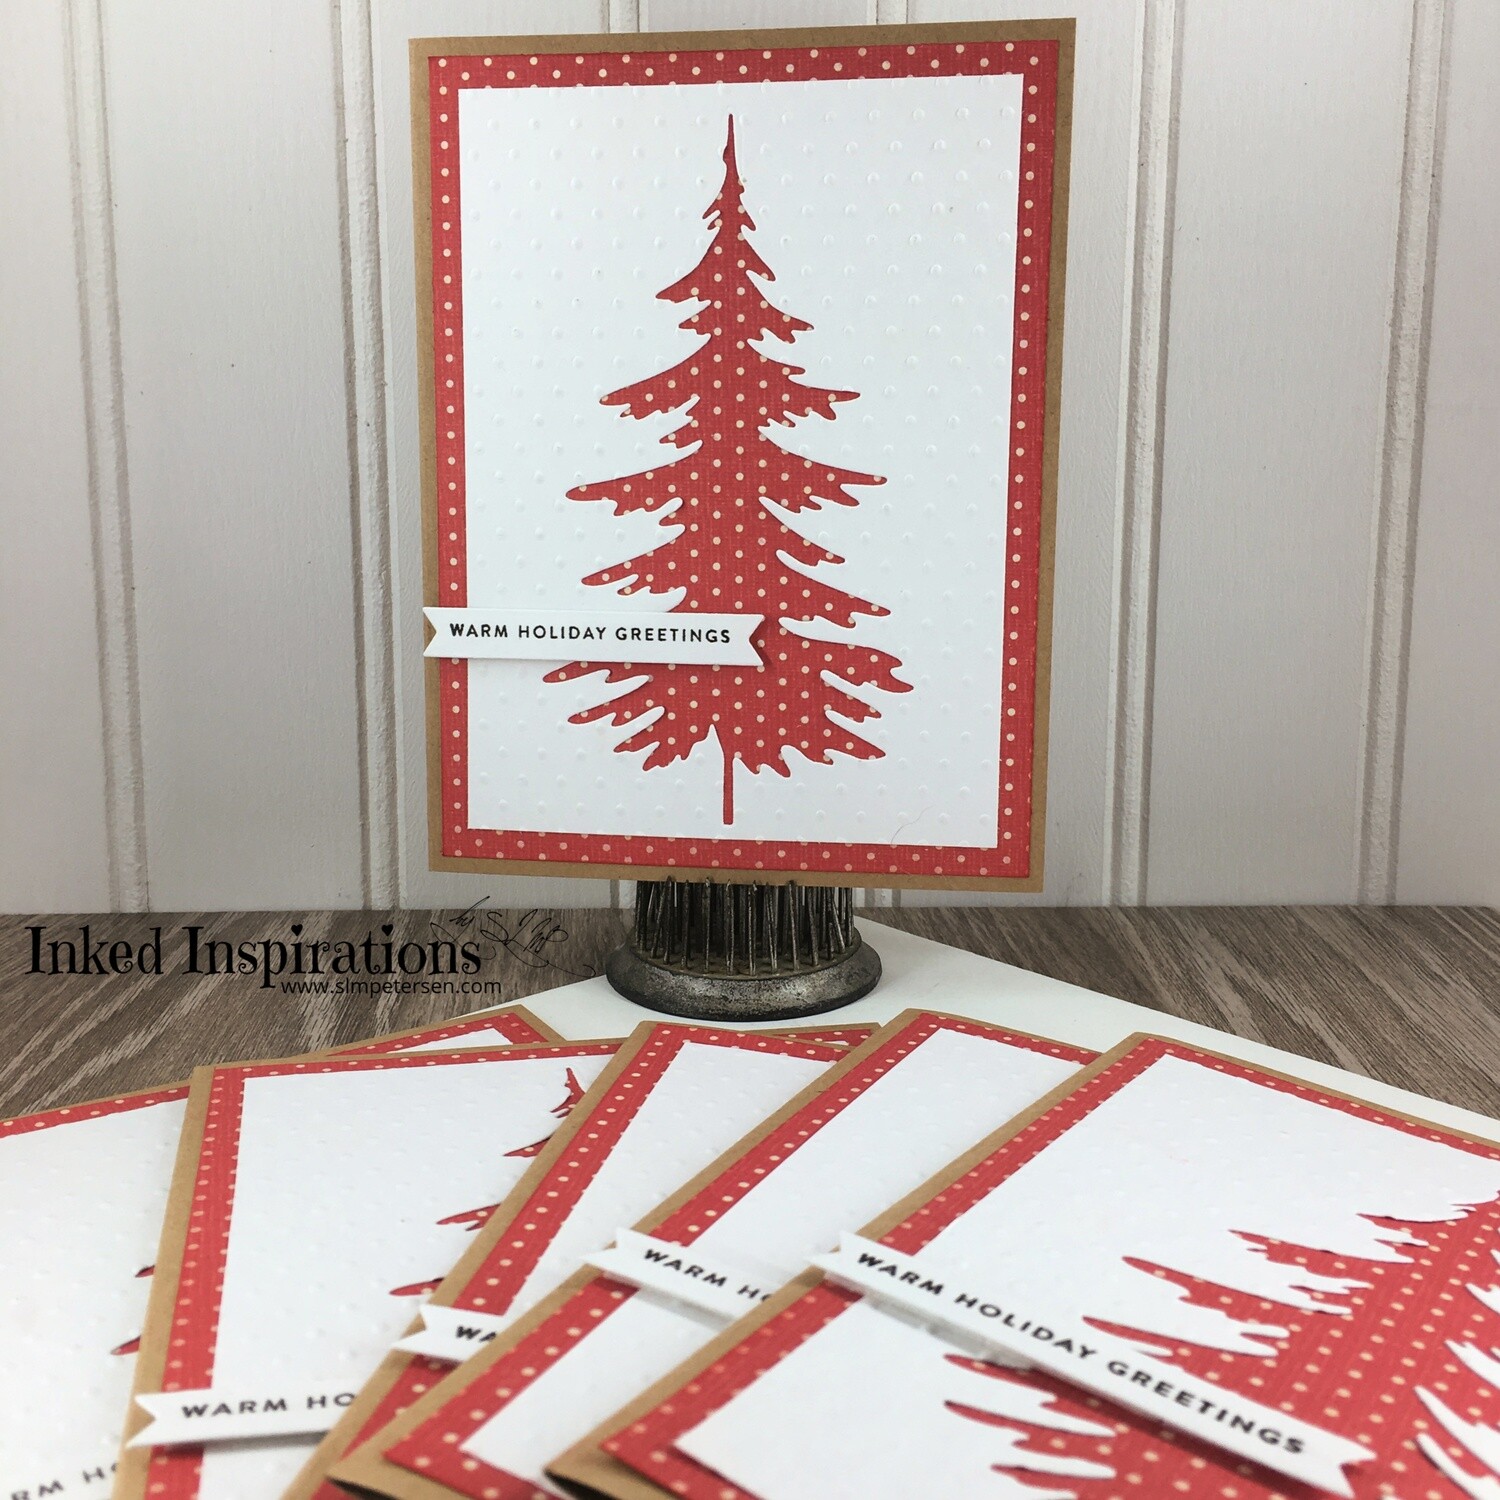 Warm Holiday Greeting - Red Polka Dot Tree